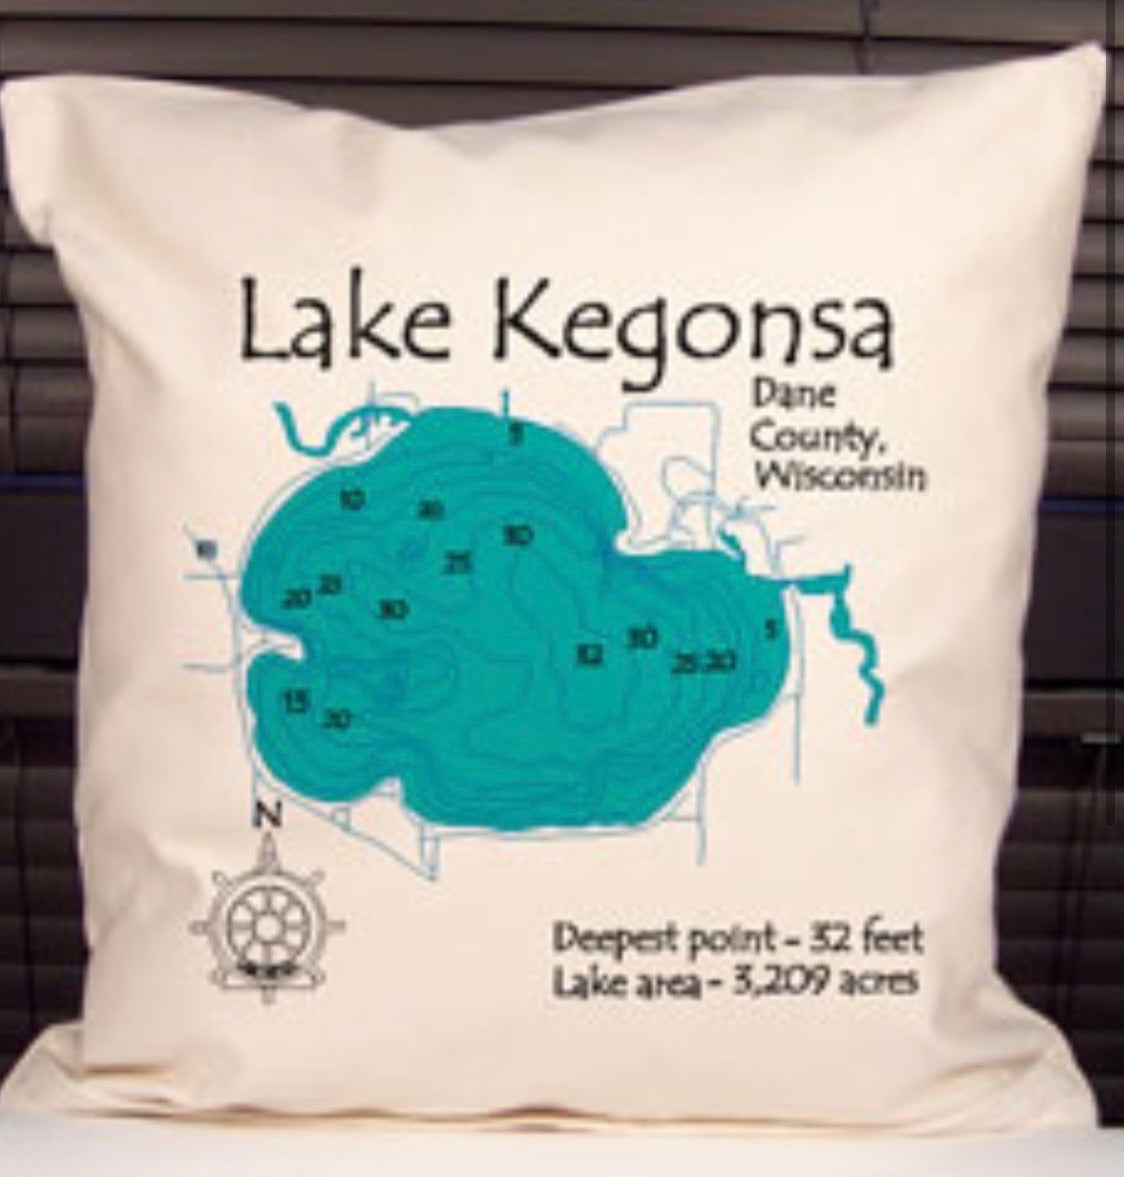 Lake Kegonsa Decorative Pillow